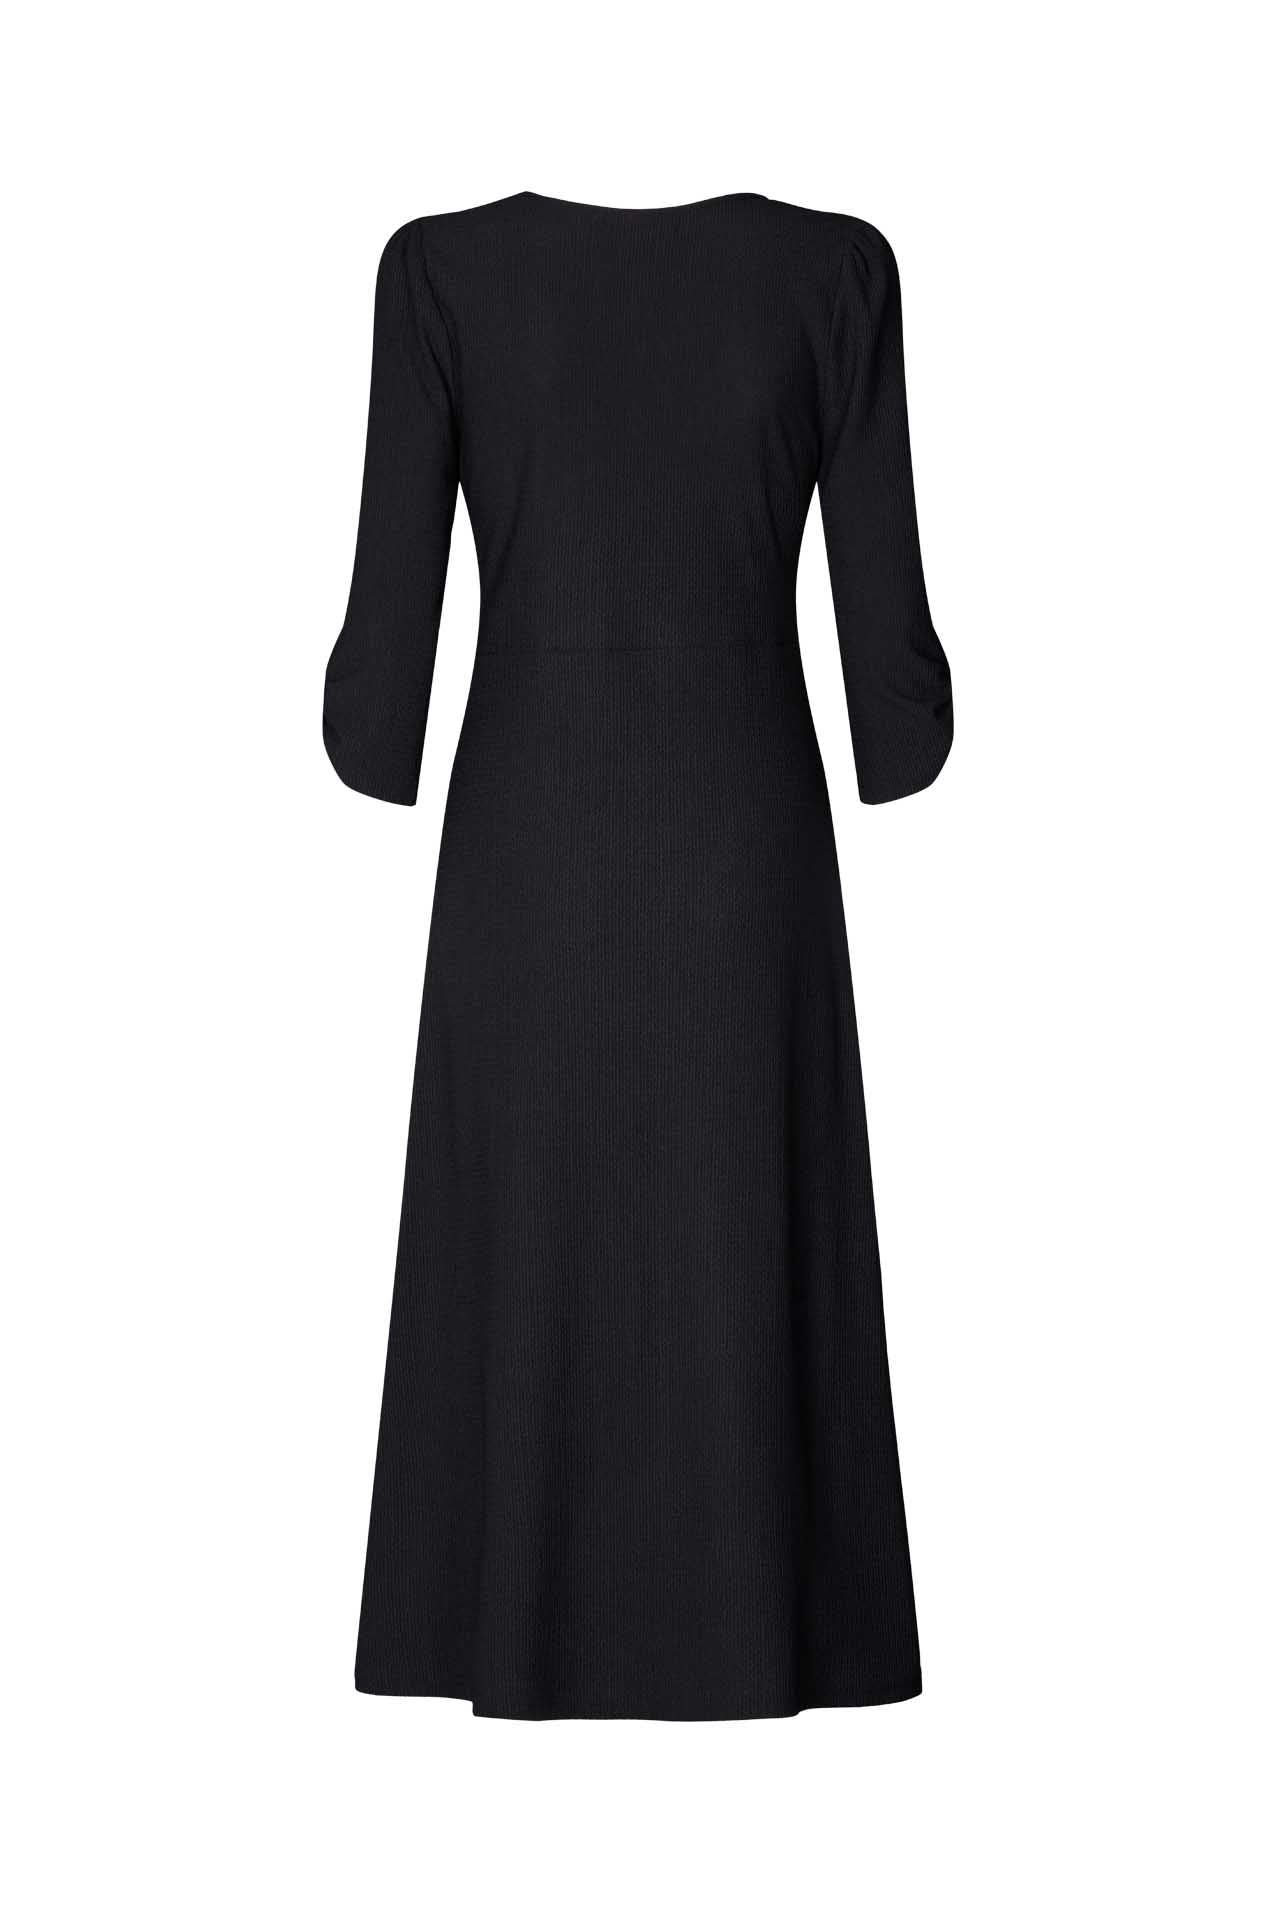 Lollys Laundry Havana Dress Dress 99 Black